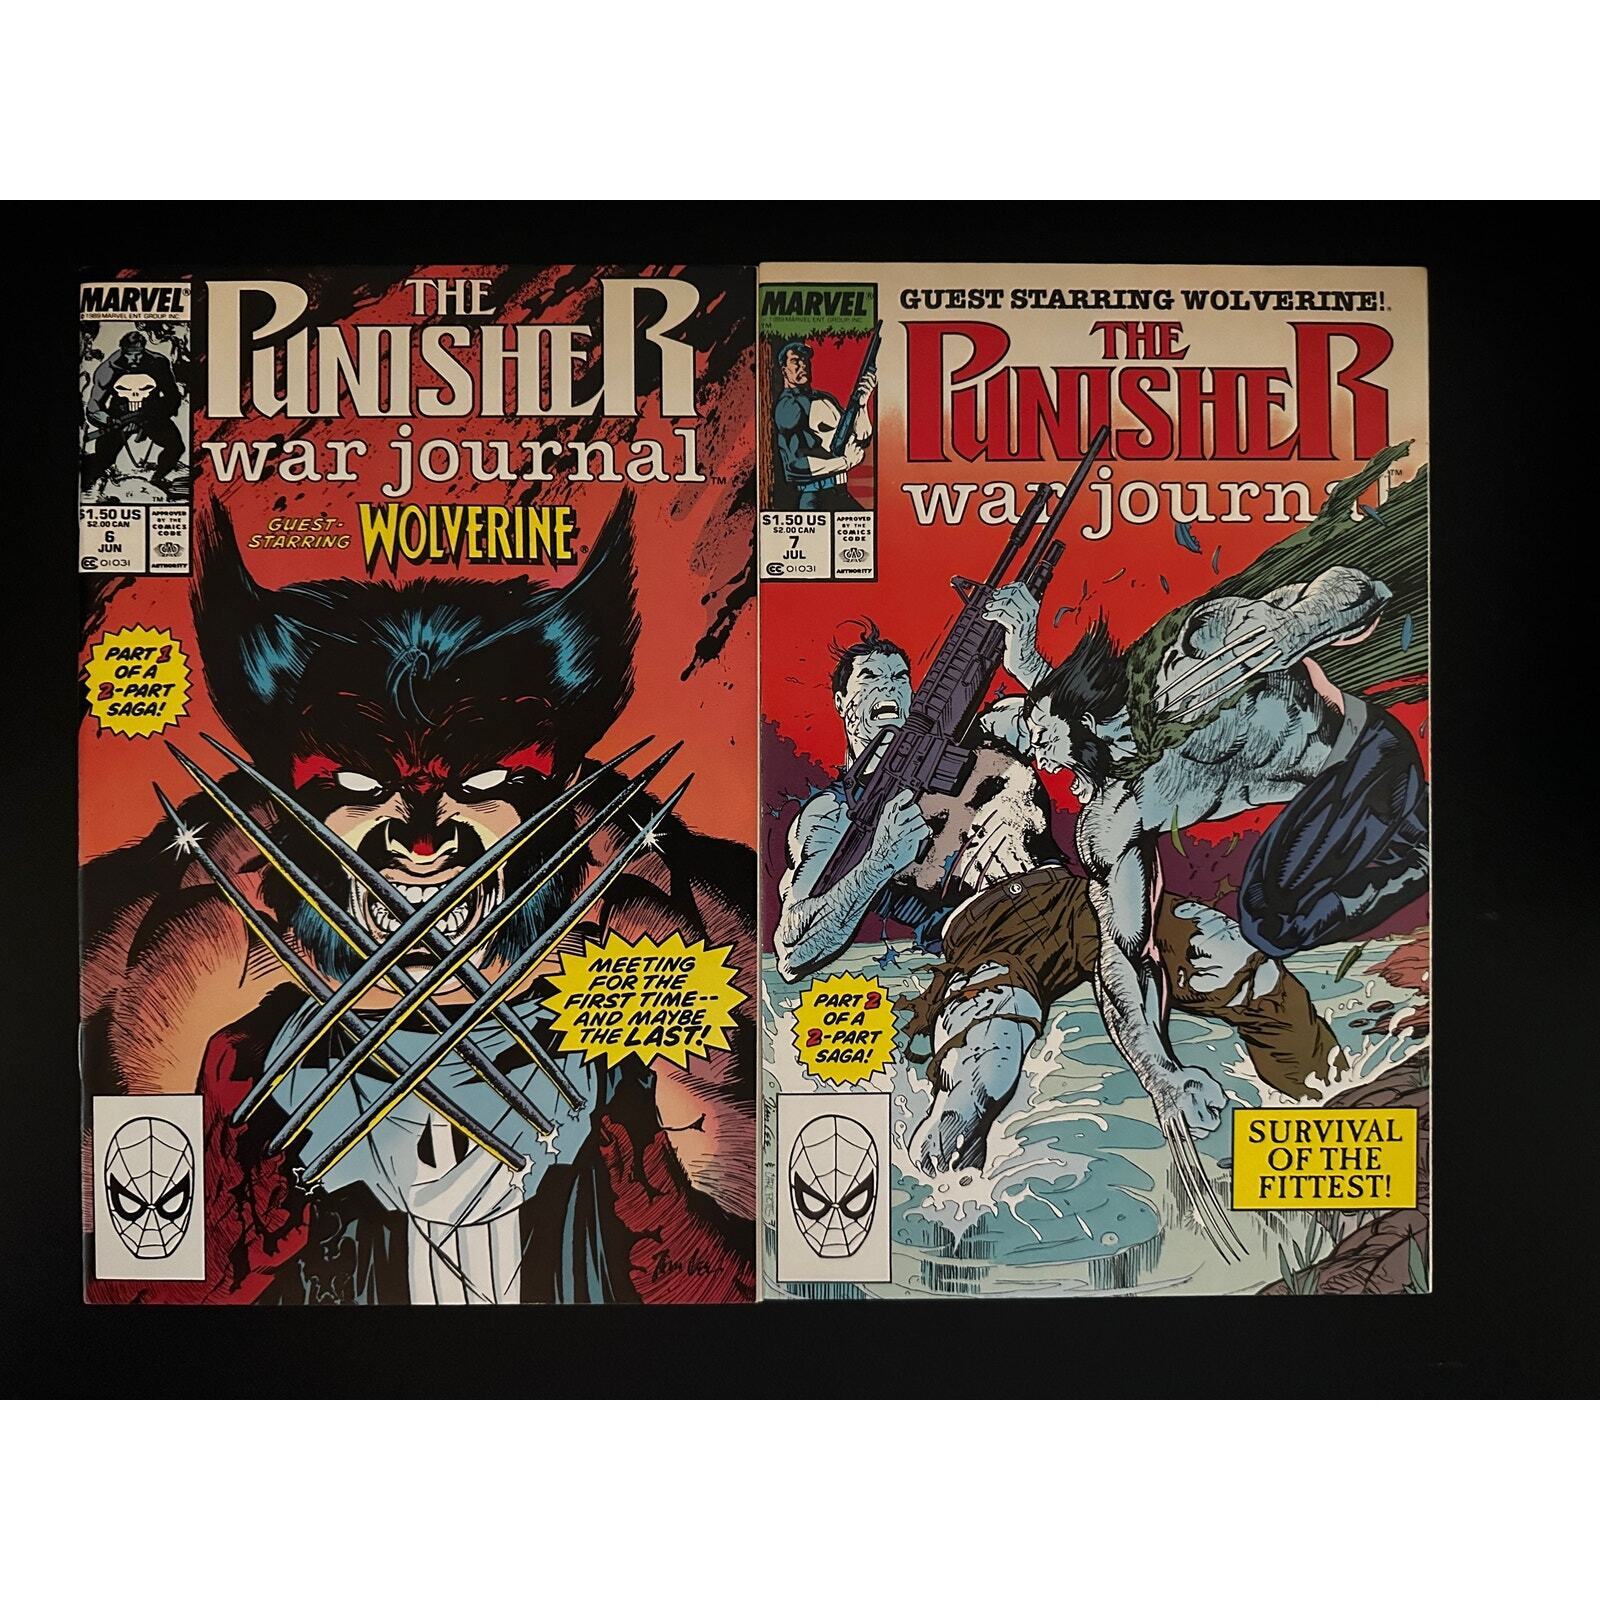 Punisher War Journal 6 7 NM Jim Lee covers Wolverine vs Punisher